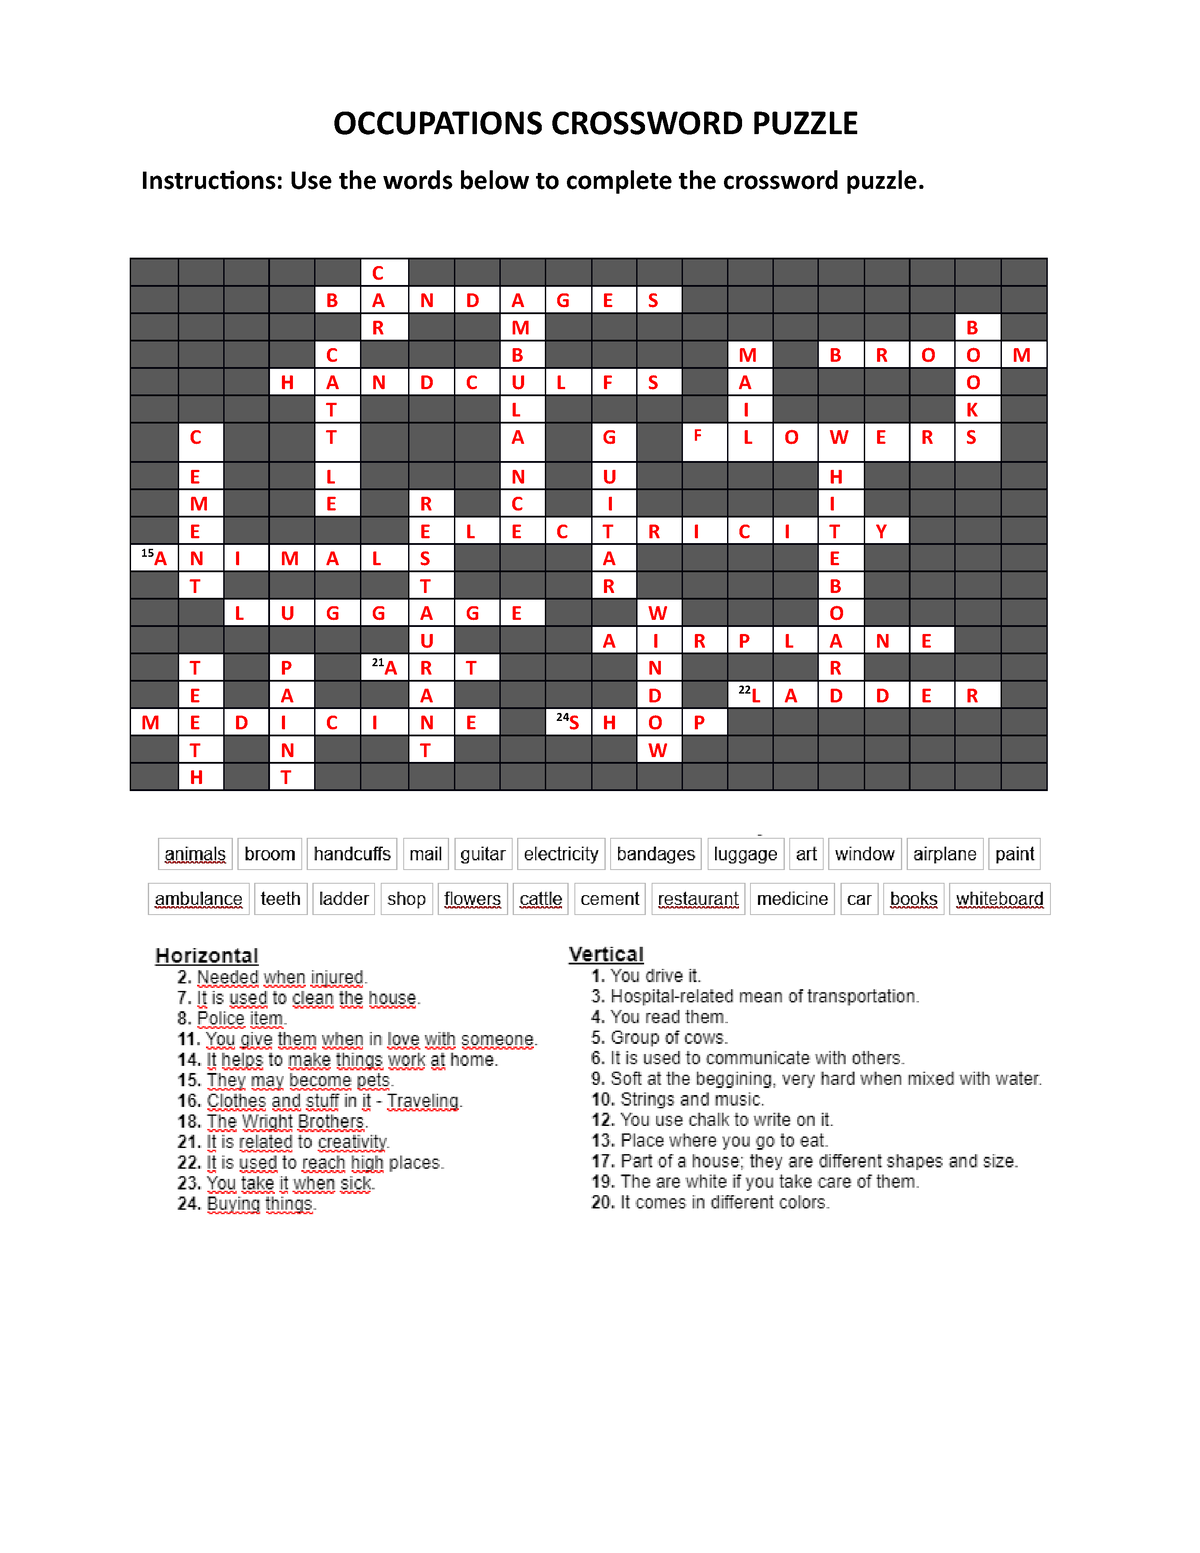 Orellana Allison Occupations Crossword Puzzle OCCUPATIONS CROSSWORD